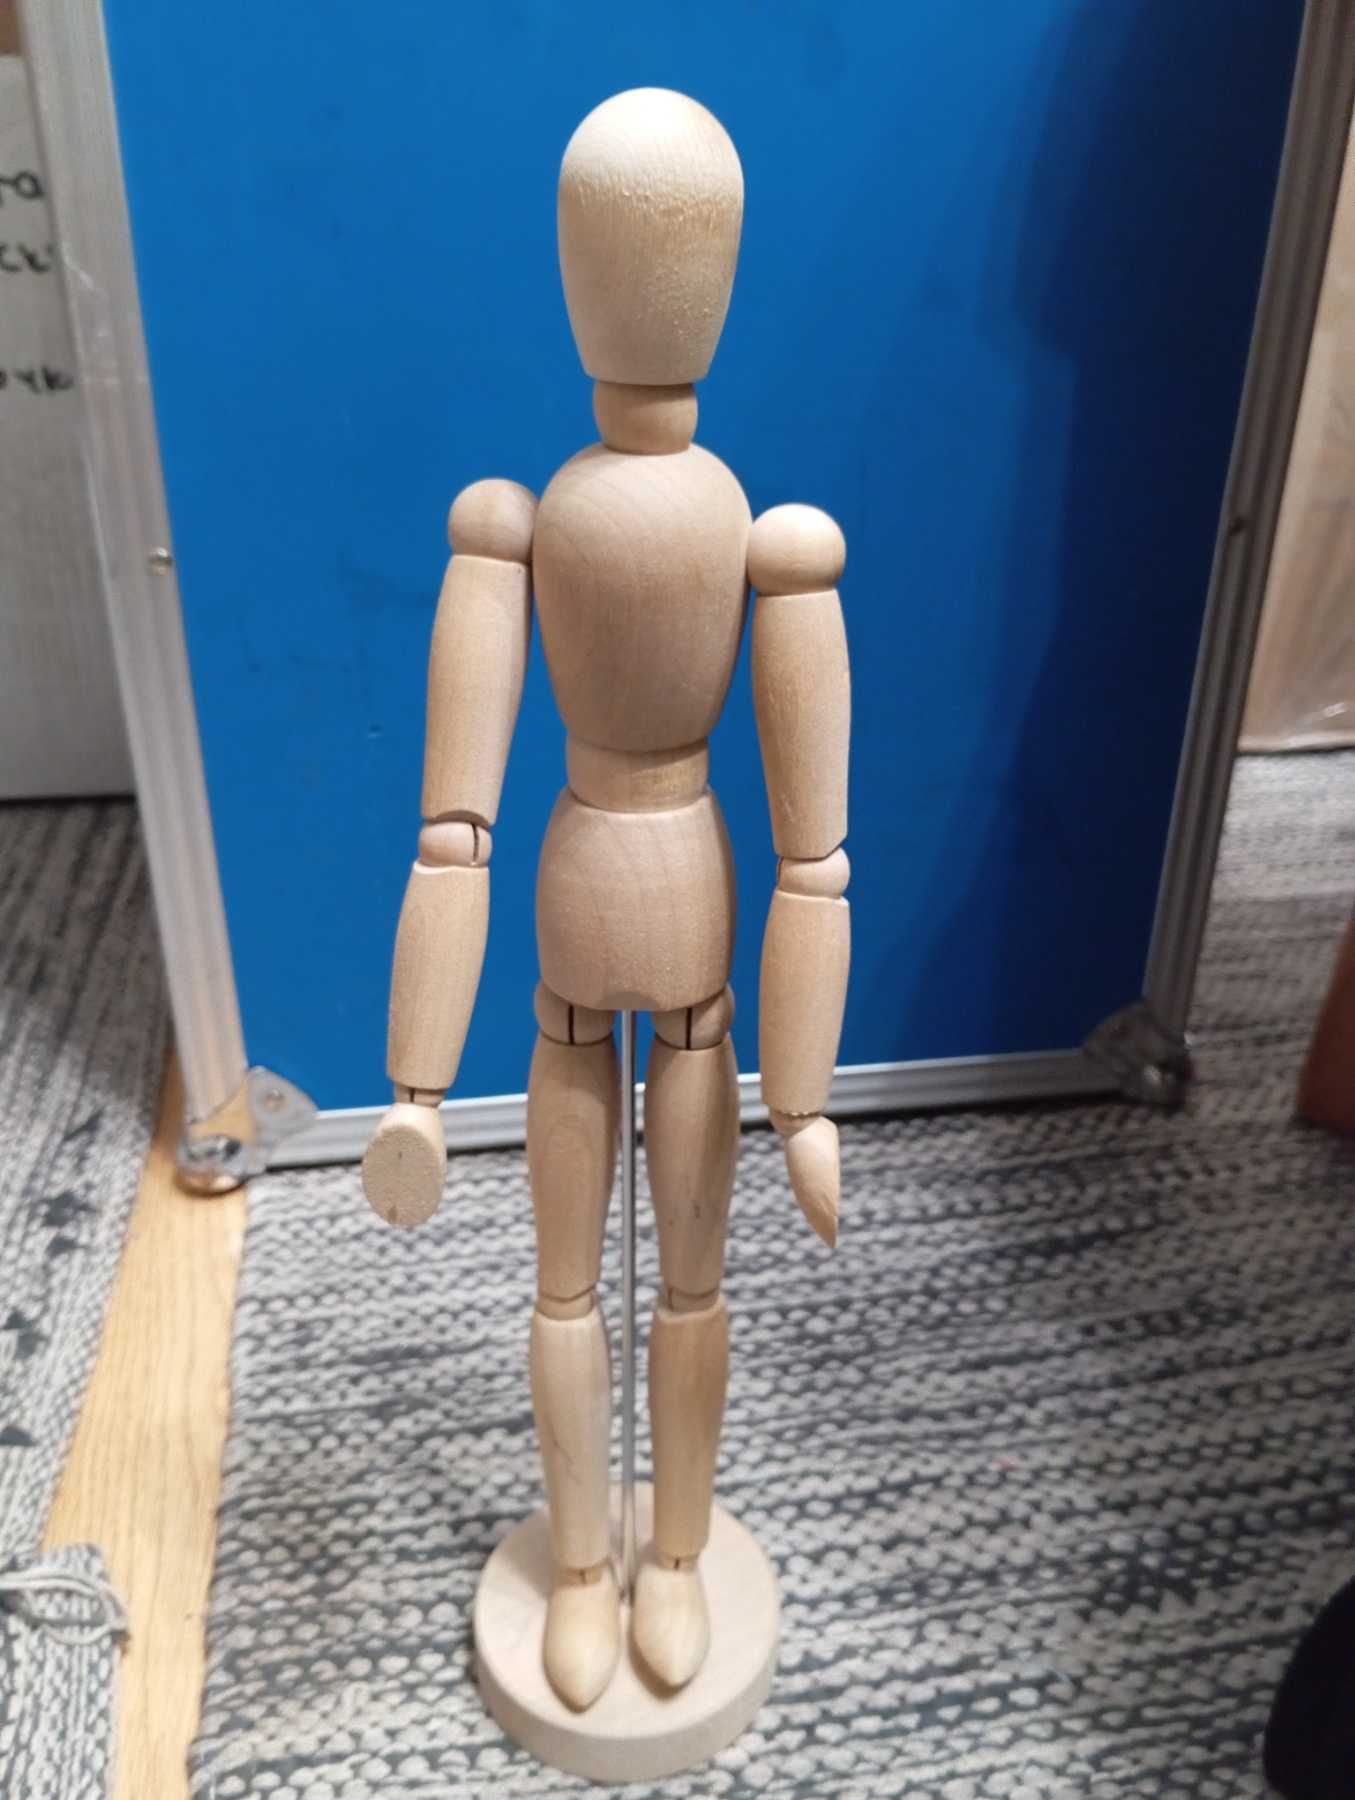 IKEA   манекен Gestalta , фигурка художника, эскиз, модель